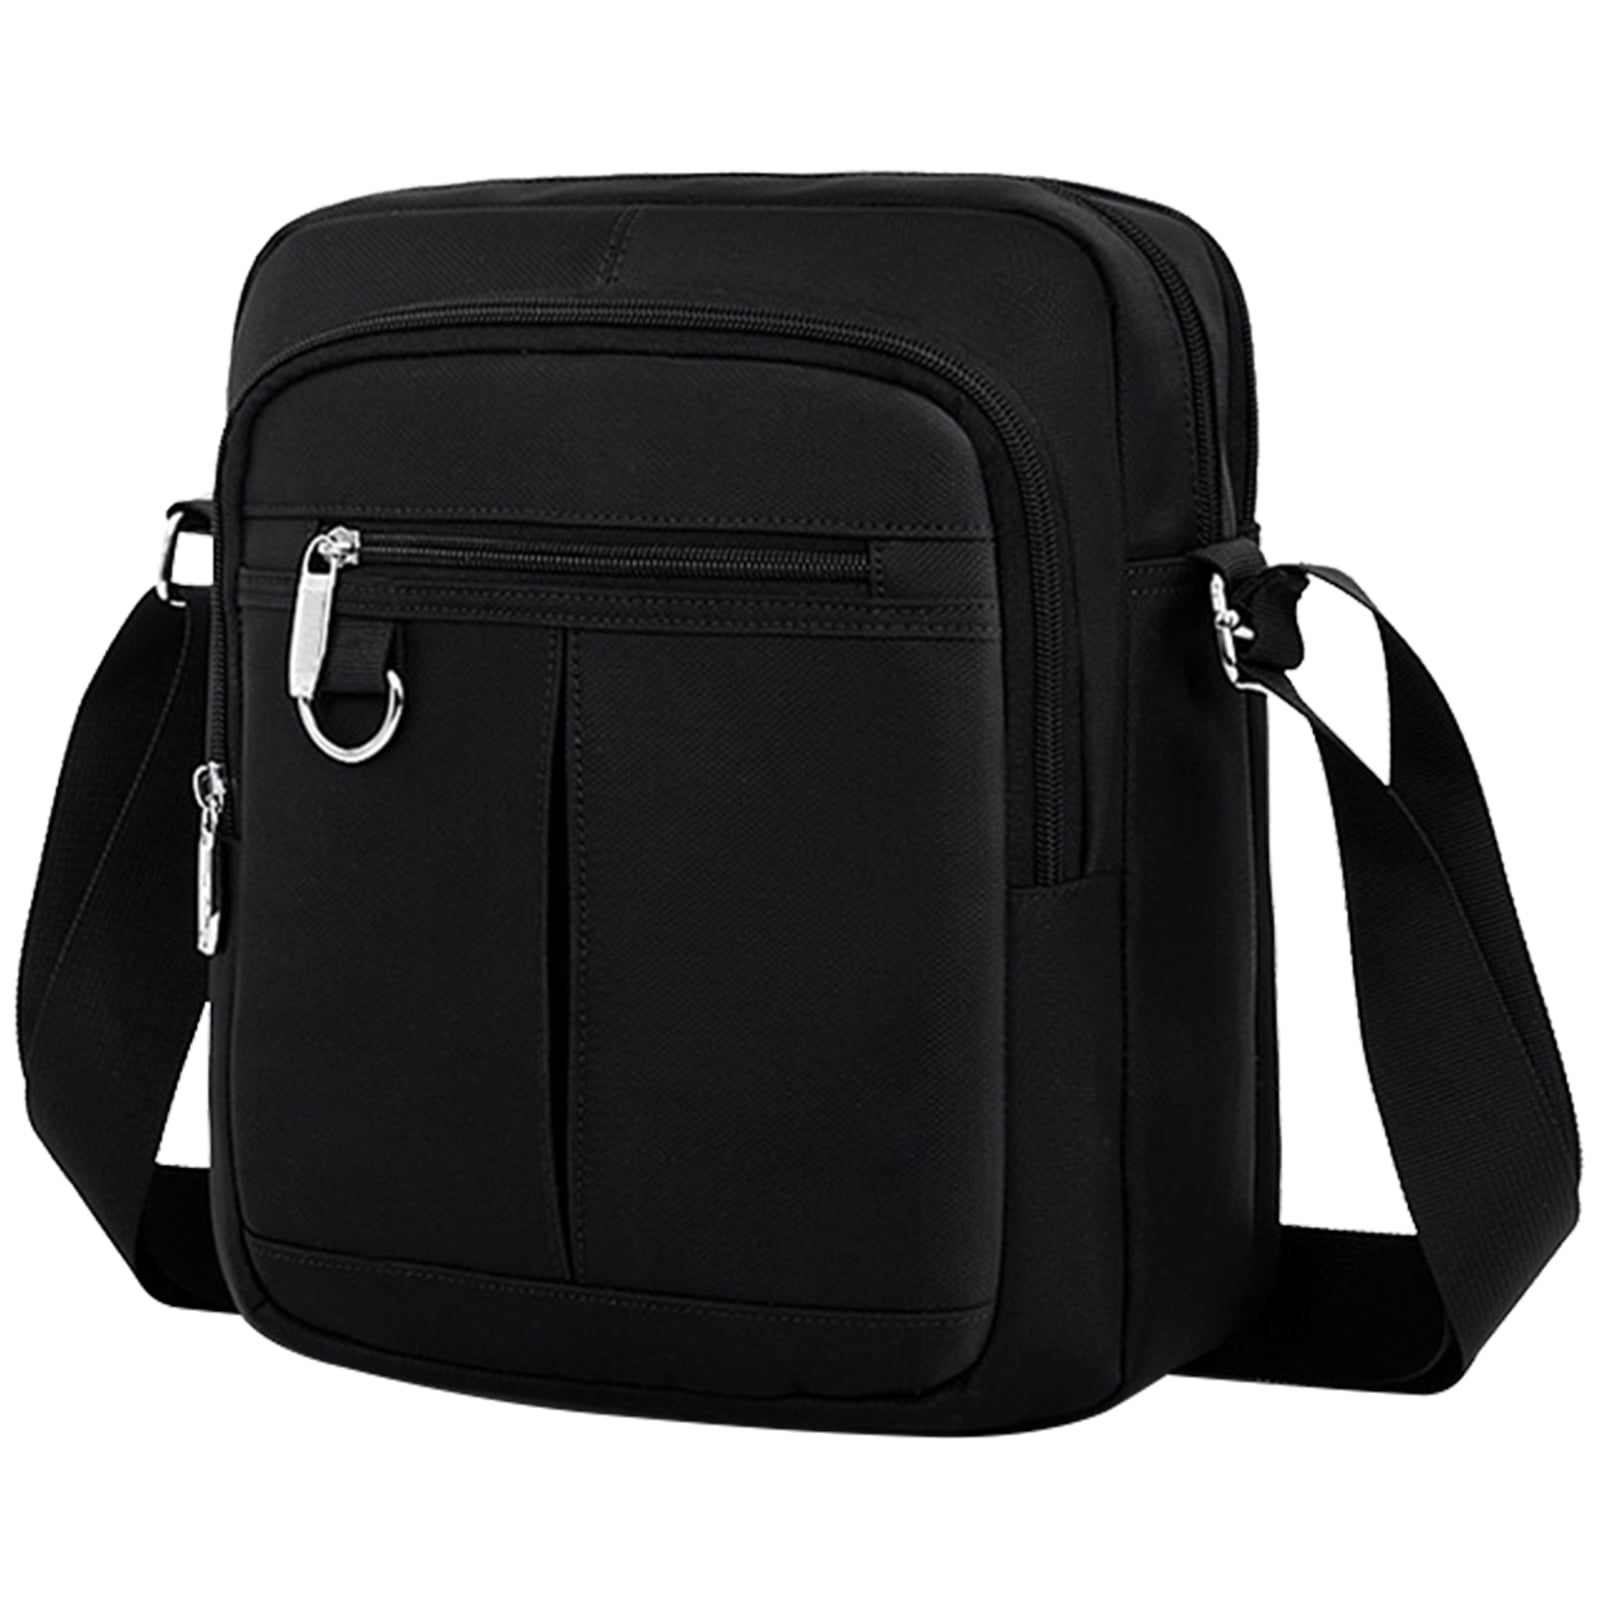 Vaupan Messenger Bag for Men, Multilayer Composite Fabric Small ...